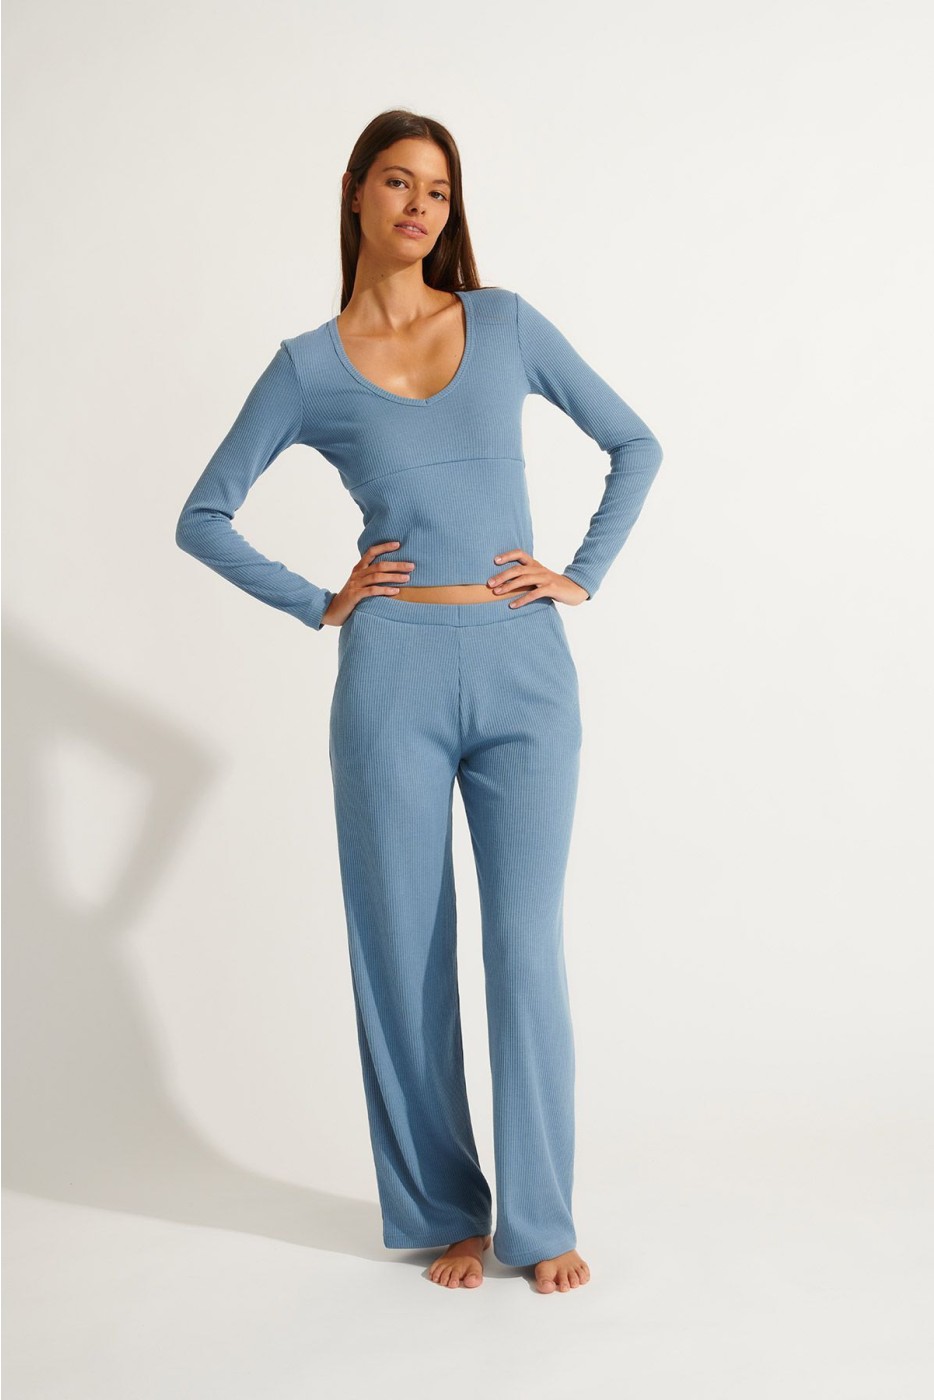 BONDY PASSION blue ribbed trousers | Banana Moon®